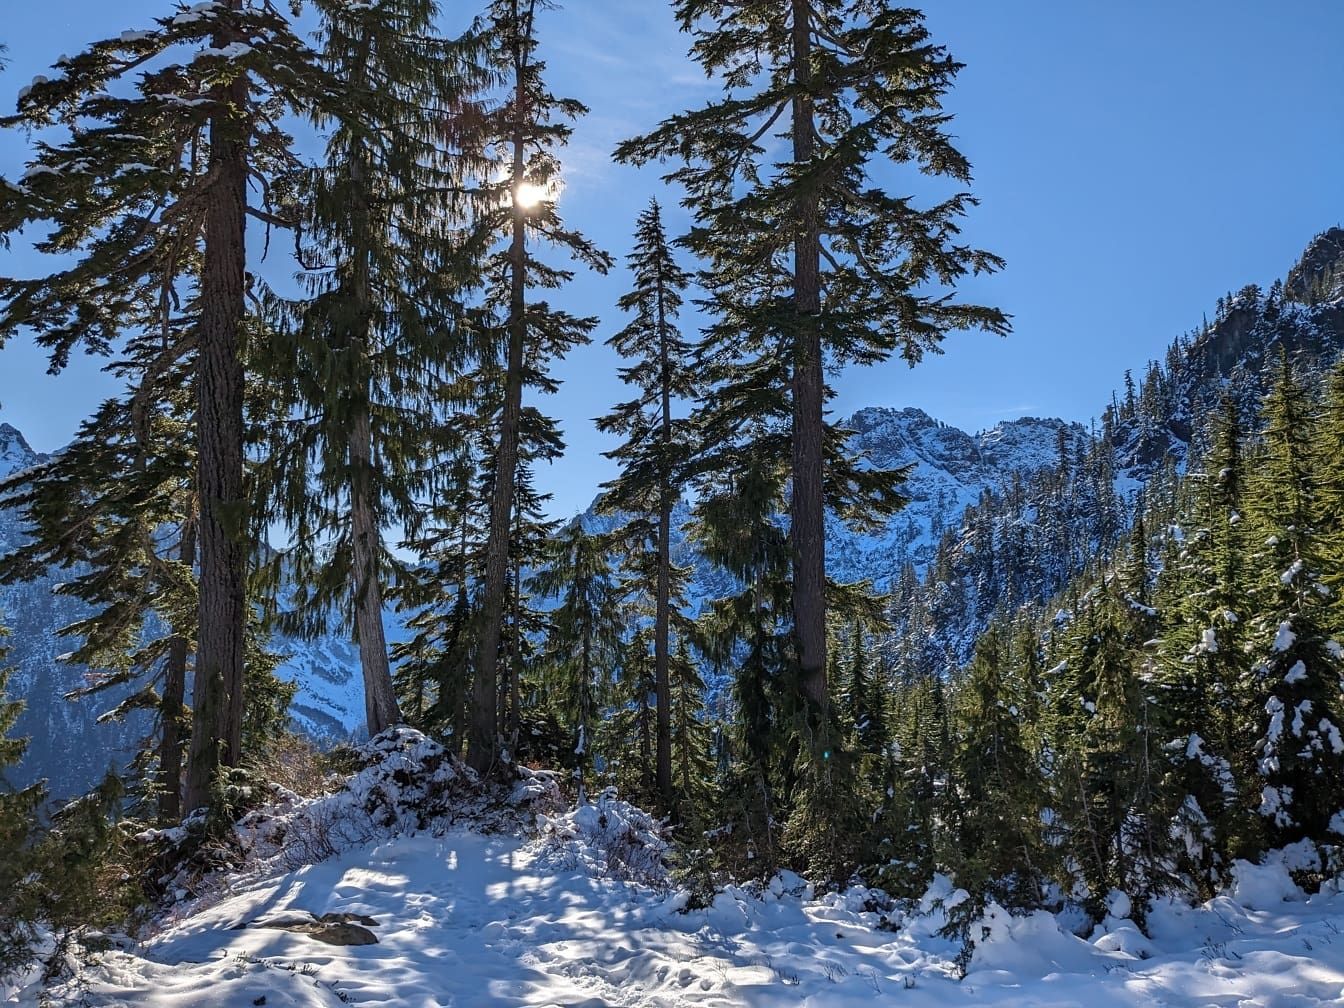 Hutan konifer bersalju di pegunungan di cuaca cerah